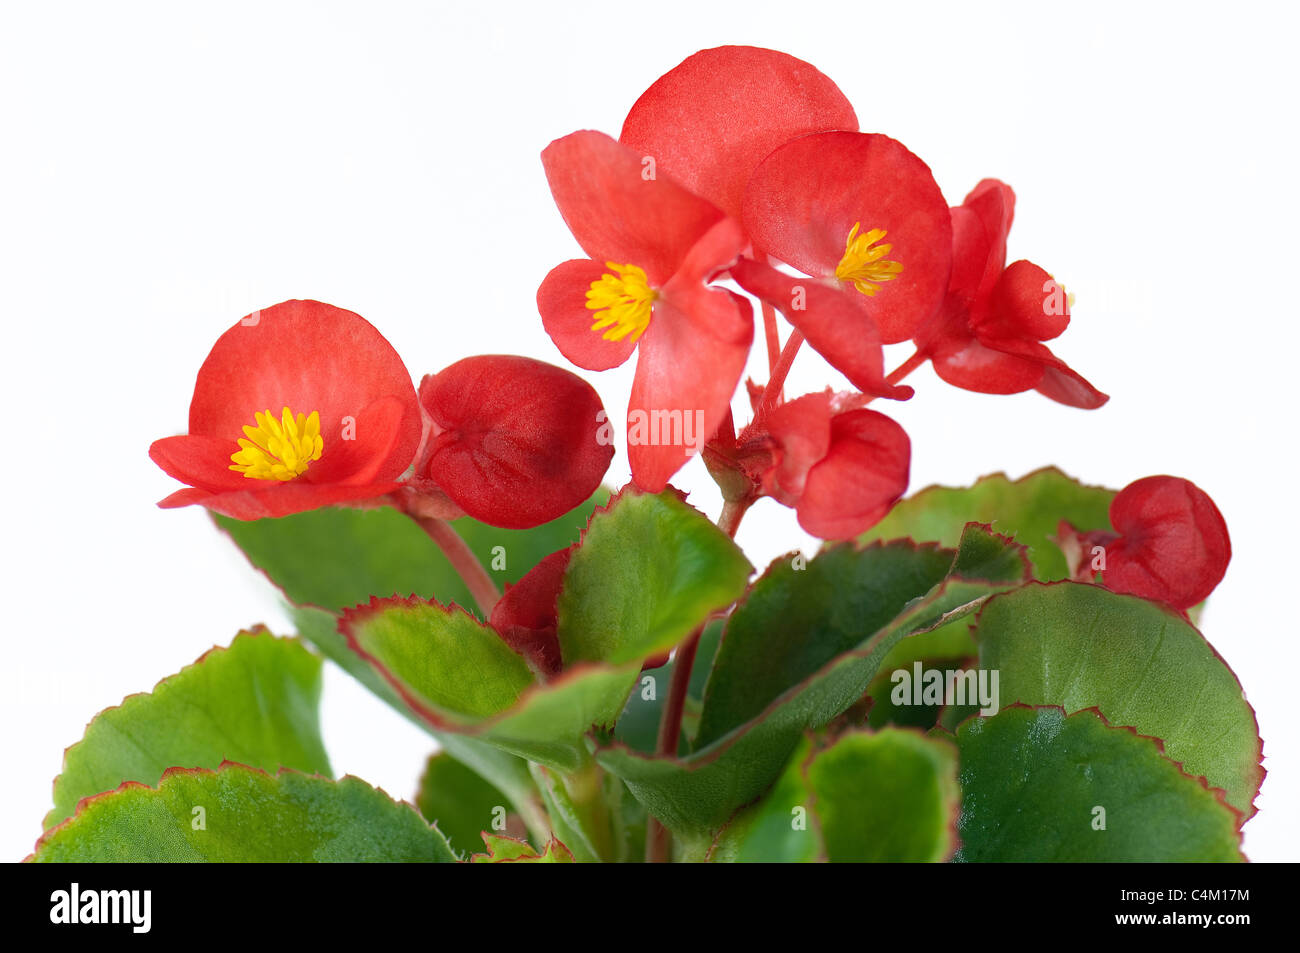 Wax Begonia, Wax-leaf Begonia (Begonia x semperfloren-cultorum), red flowering plant. Studio picture against a white background Stock Photo